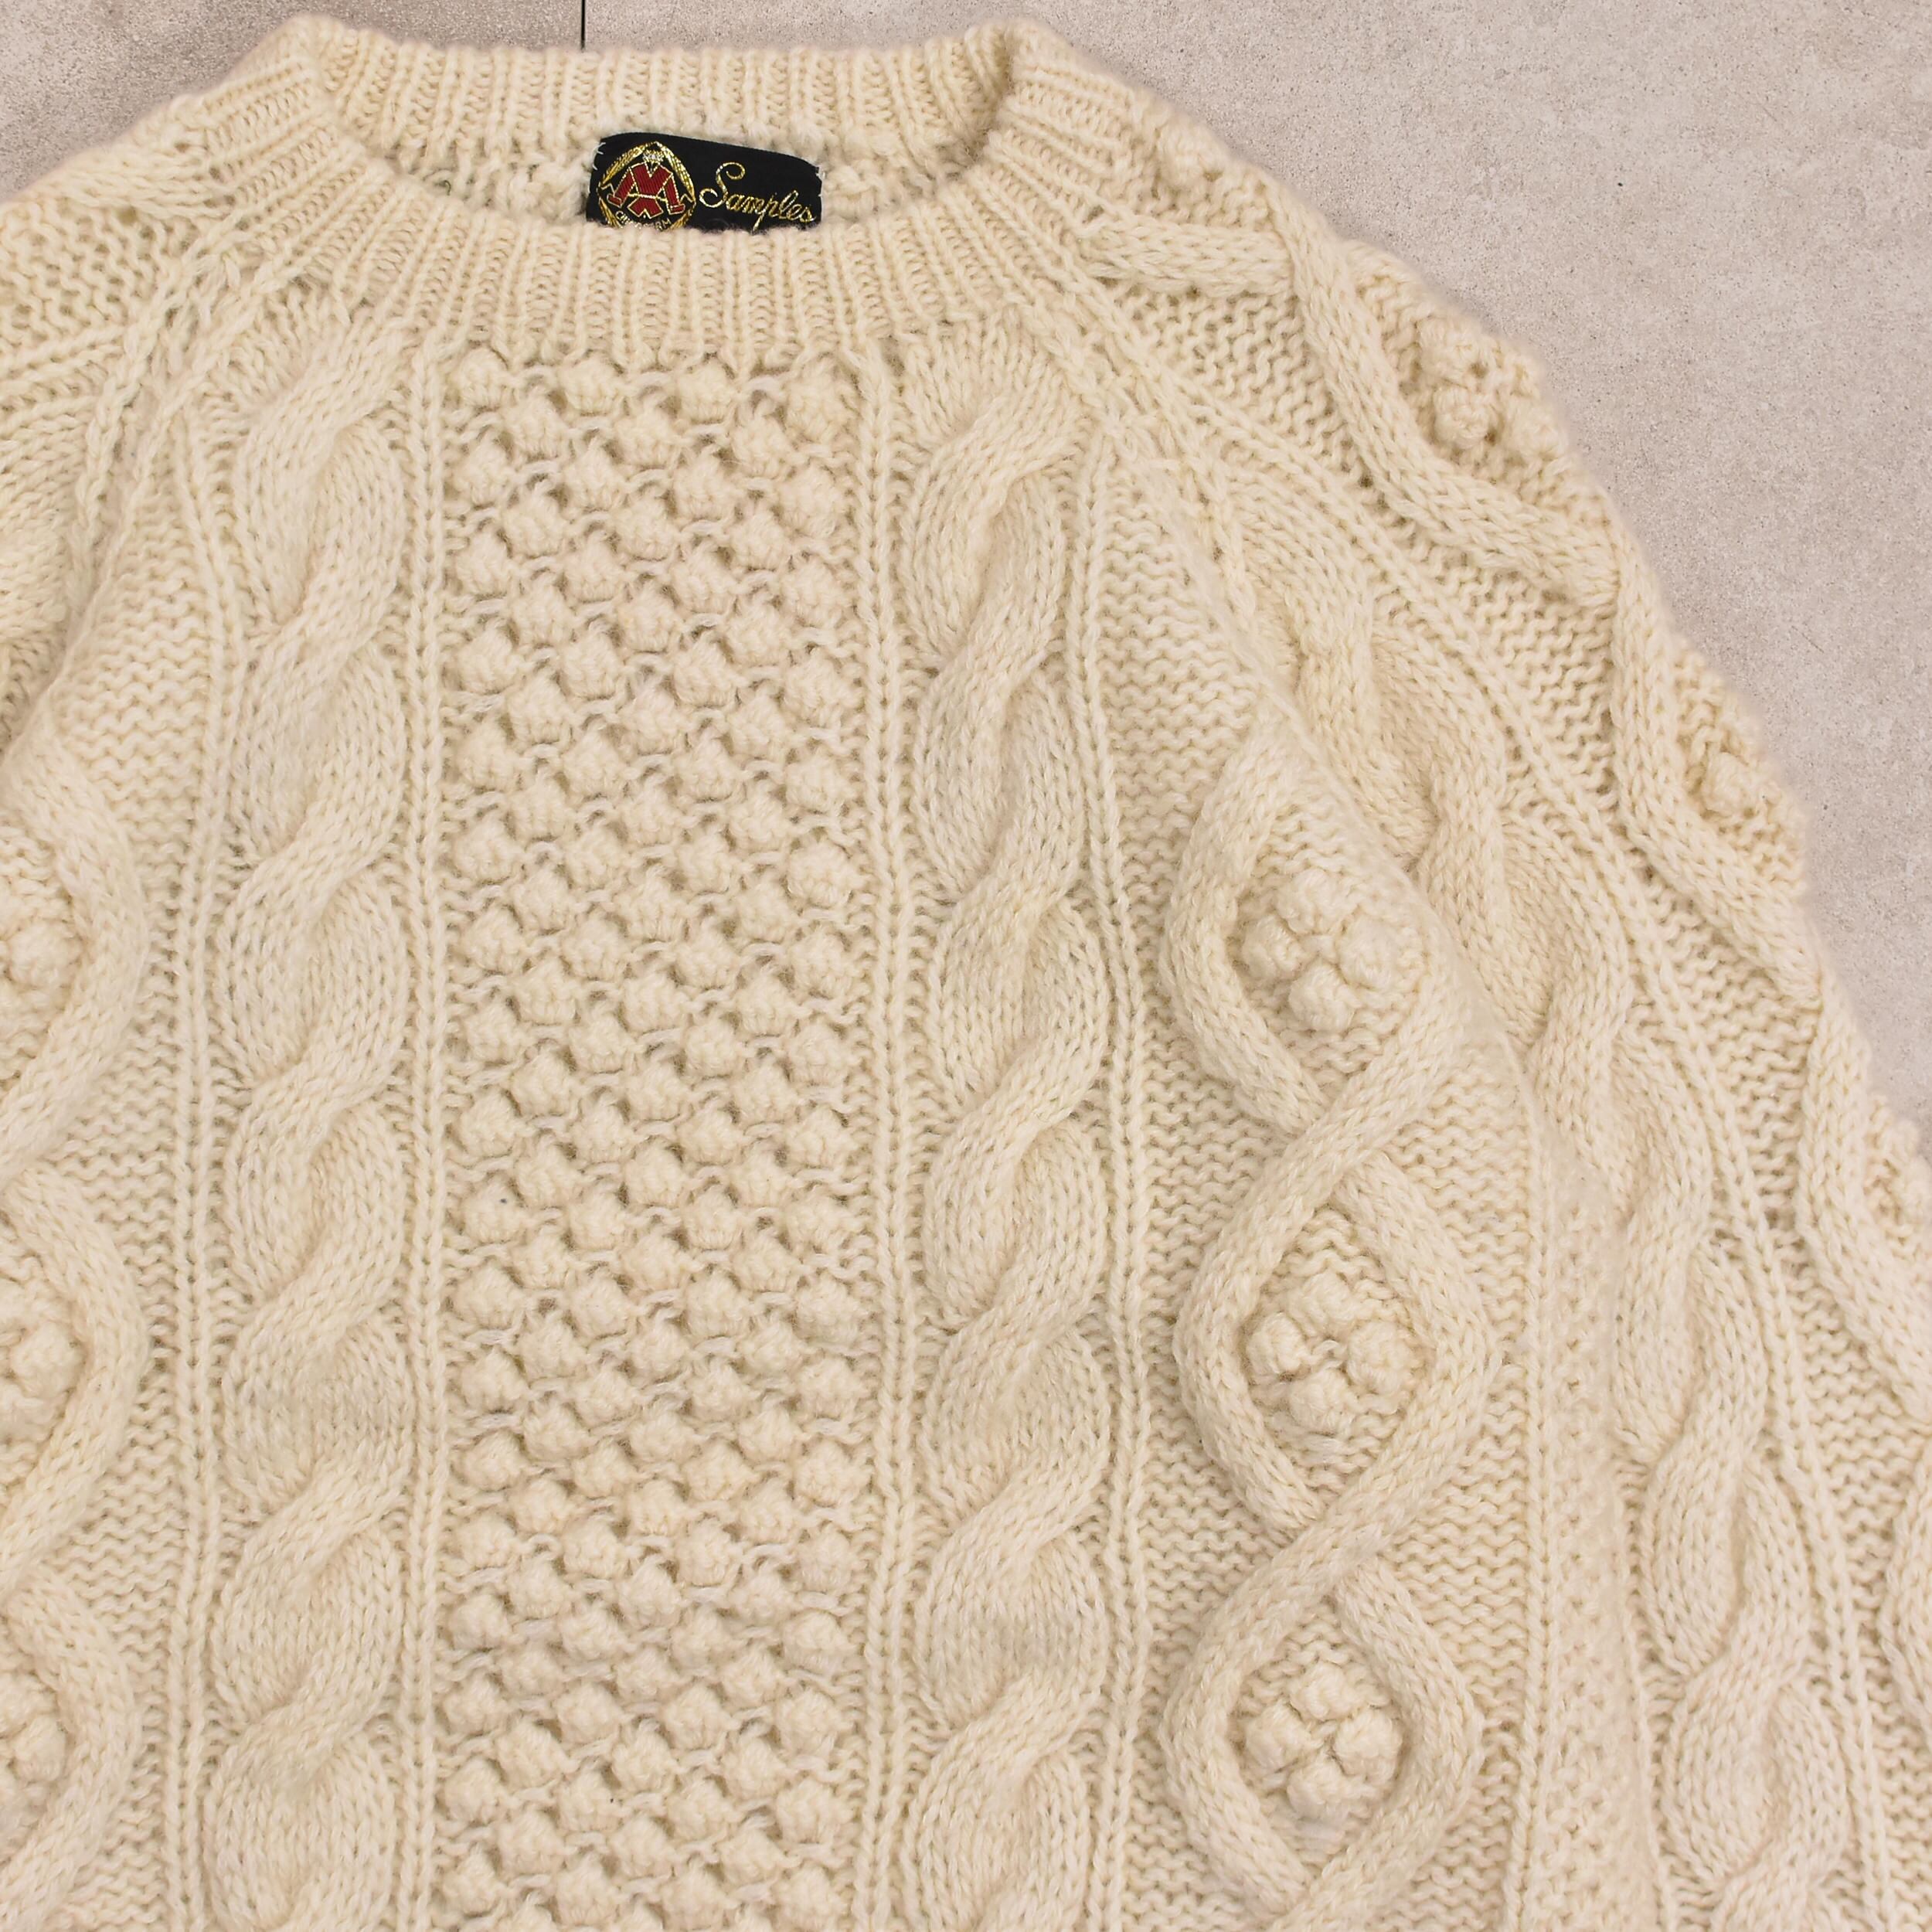 Aran sweater / Fisherman knit